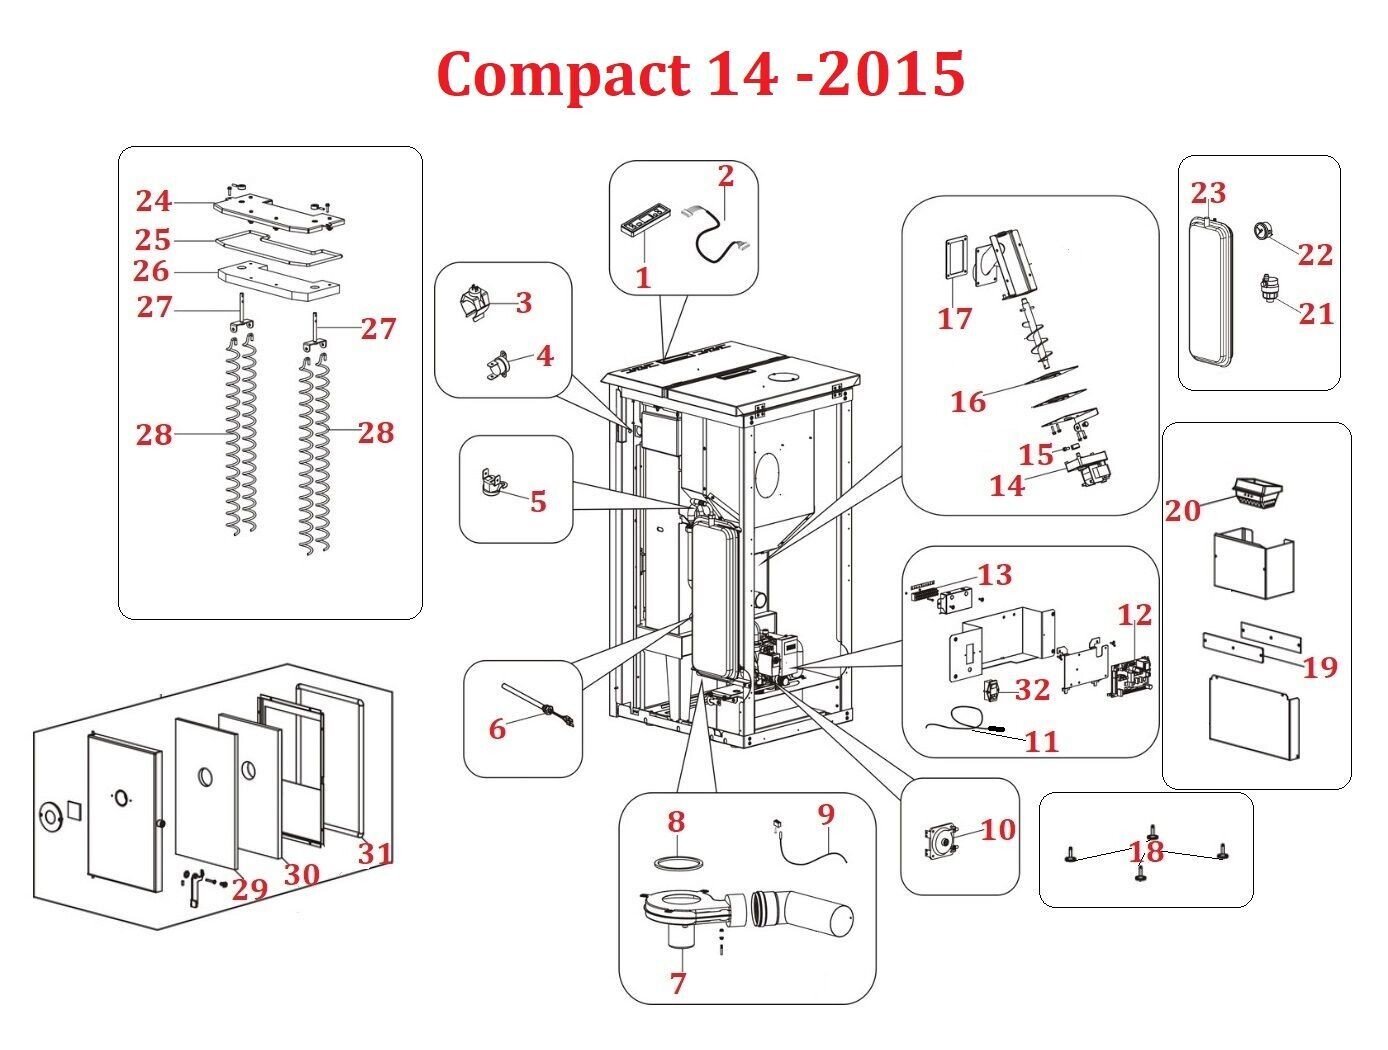 Compact 14 -2015